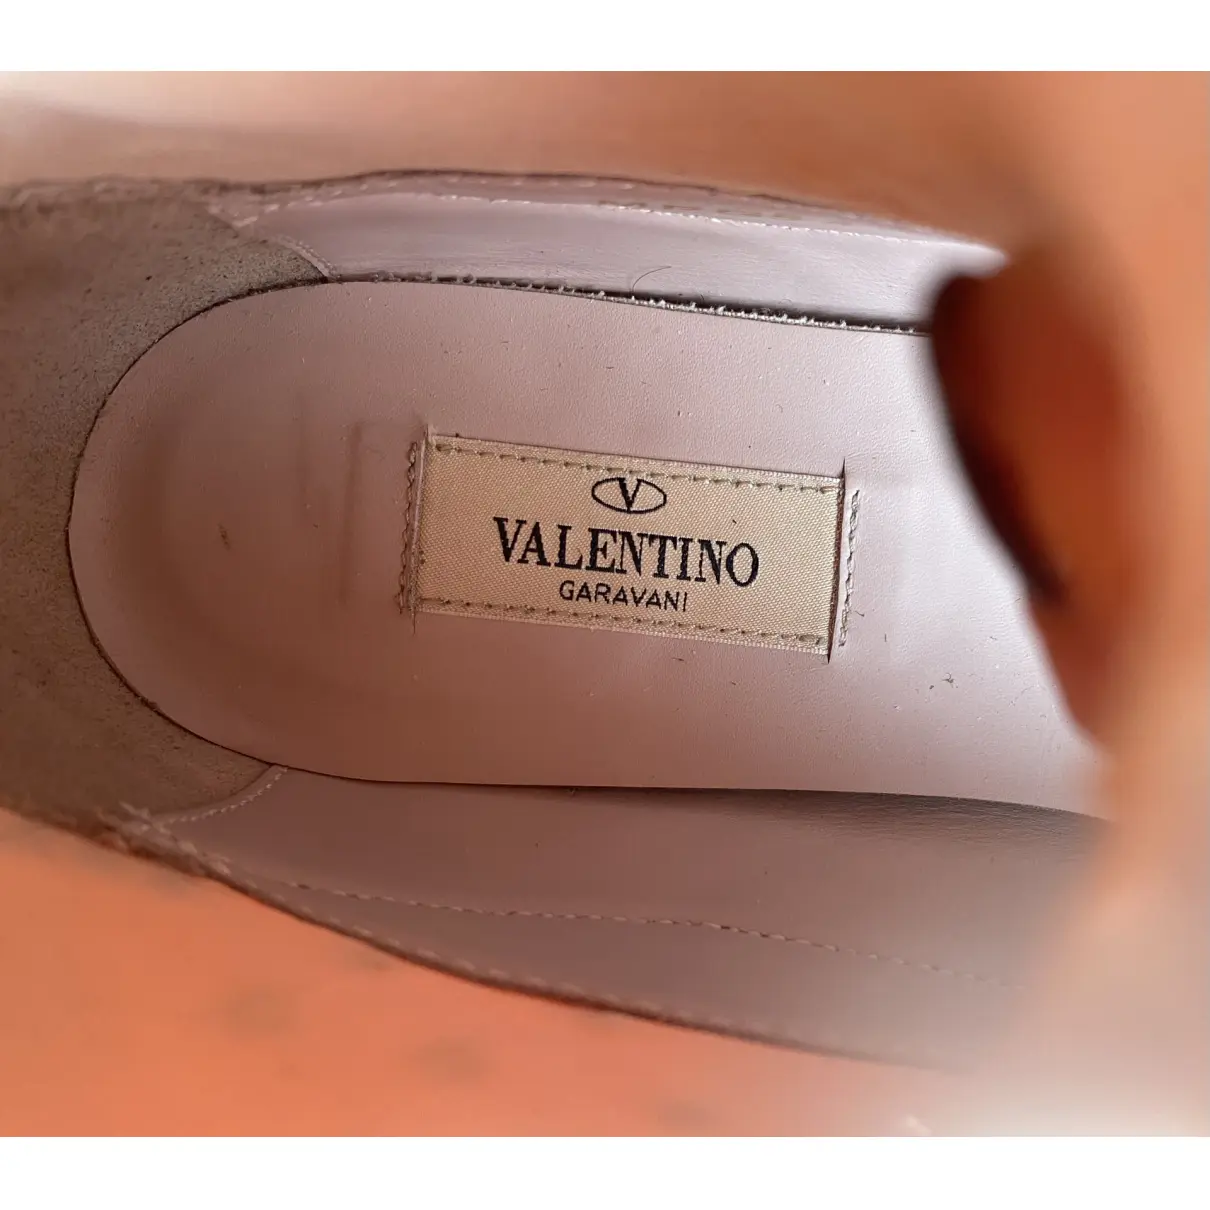 Buy Valentino Garavani Sneakers chaussettes VLTN glitter trainers online